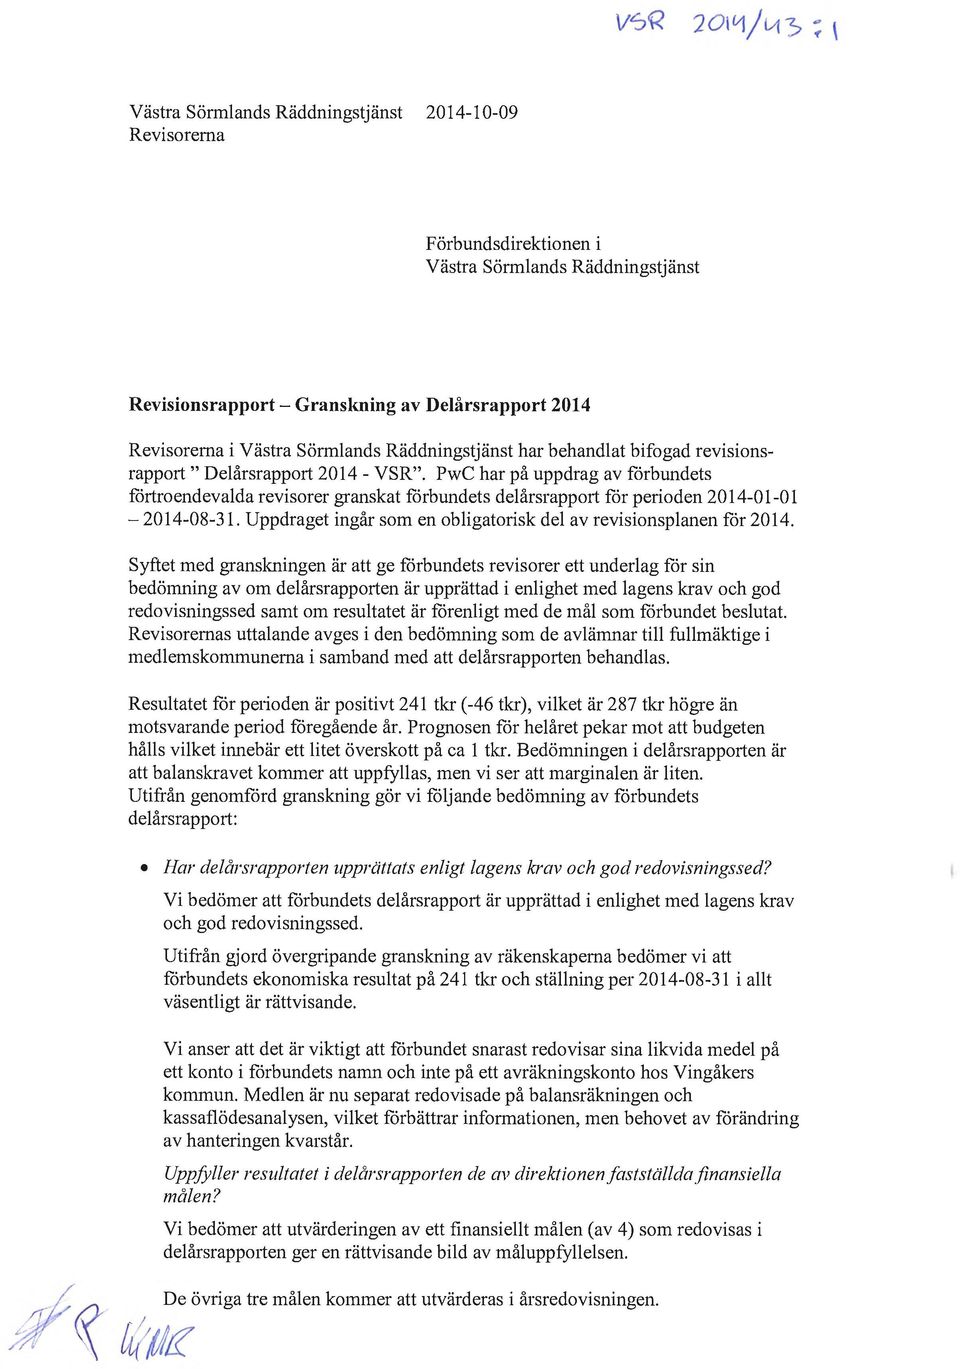 PwC har på uppdrag av fårbundets fårtroendevalda revisorer granskat fårbundets delårsrapport får perioden 2014-01-0 l -2014-08-31. Uppdraget ingår som en obligatorisk del av revisionsplanen får 2014.